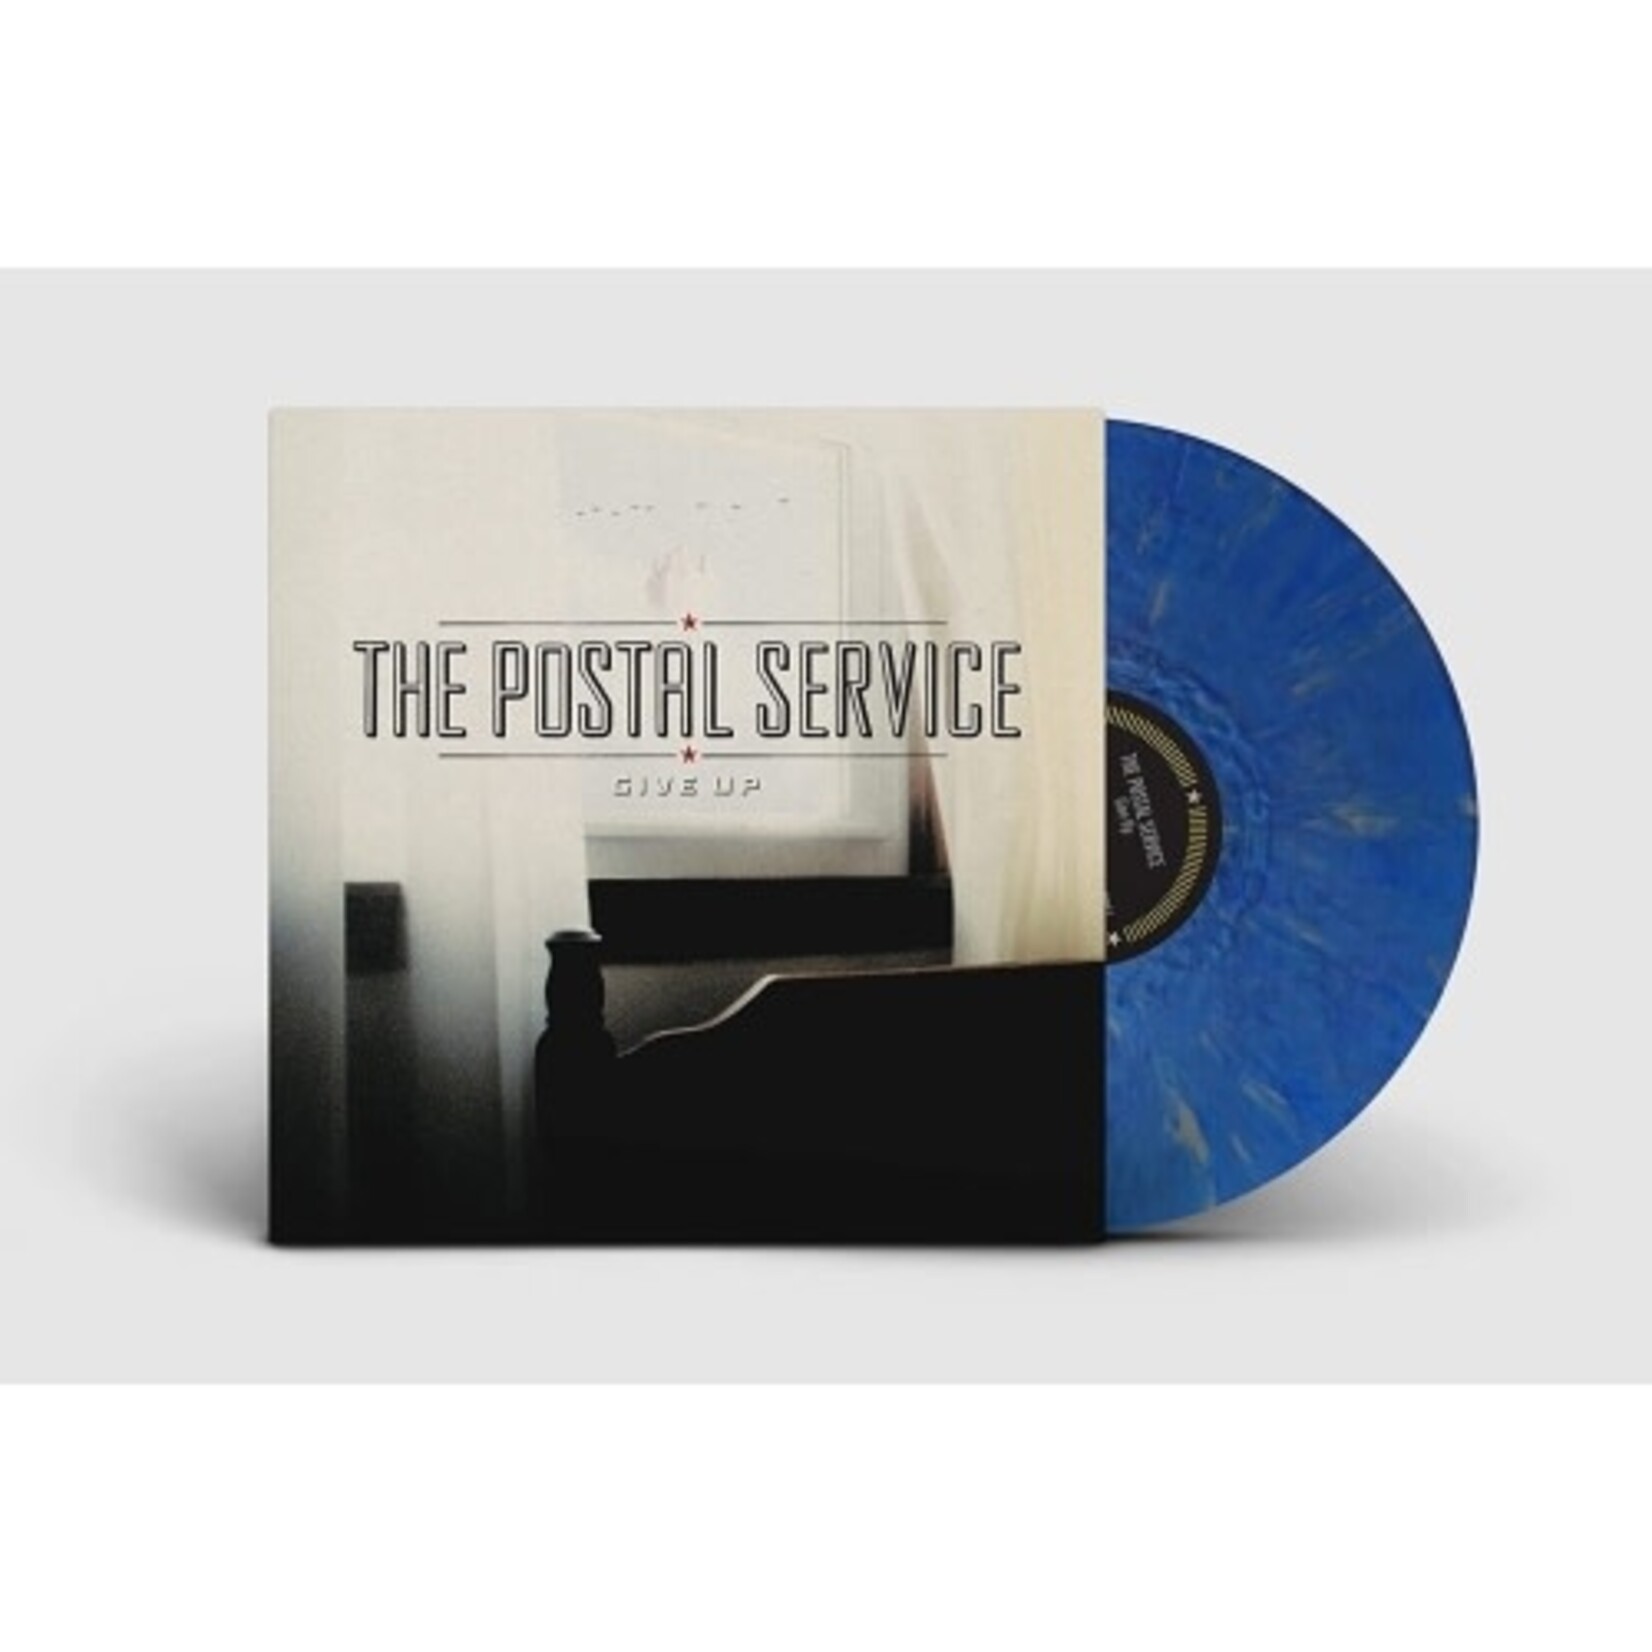 [New] Postal Service - Give Up (metallic silver vinyl)